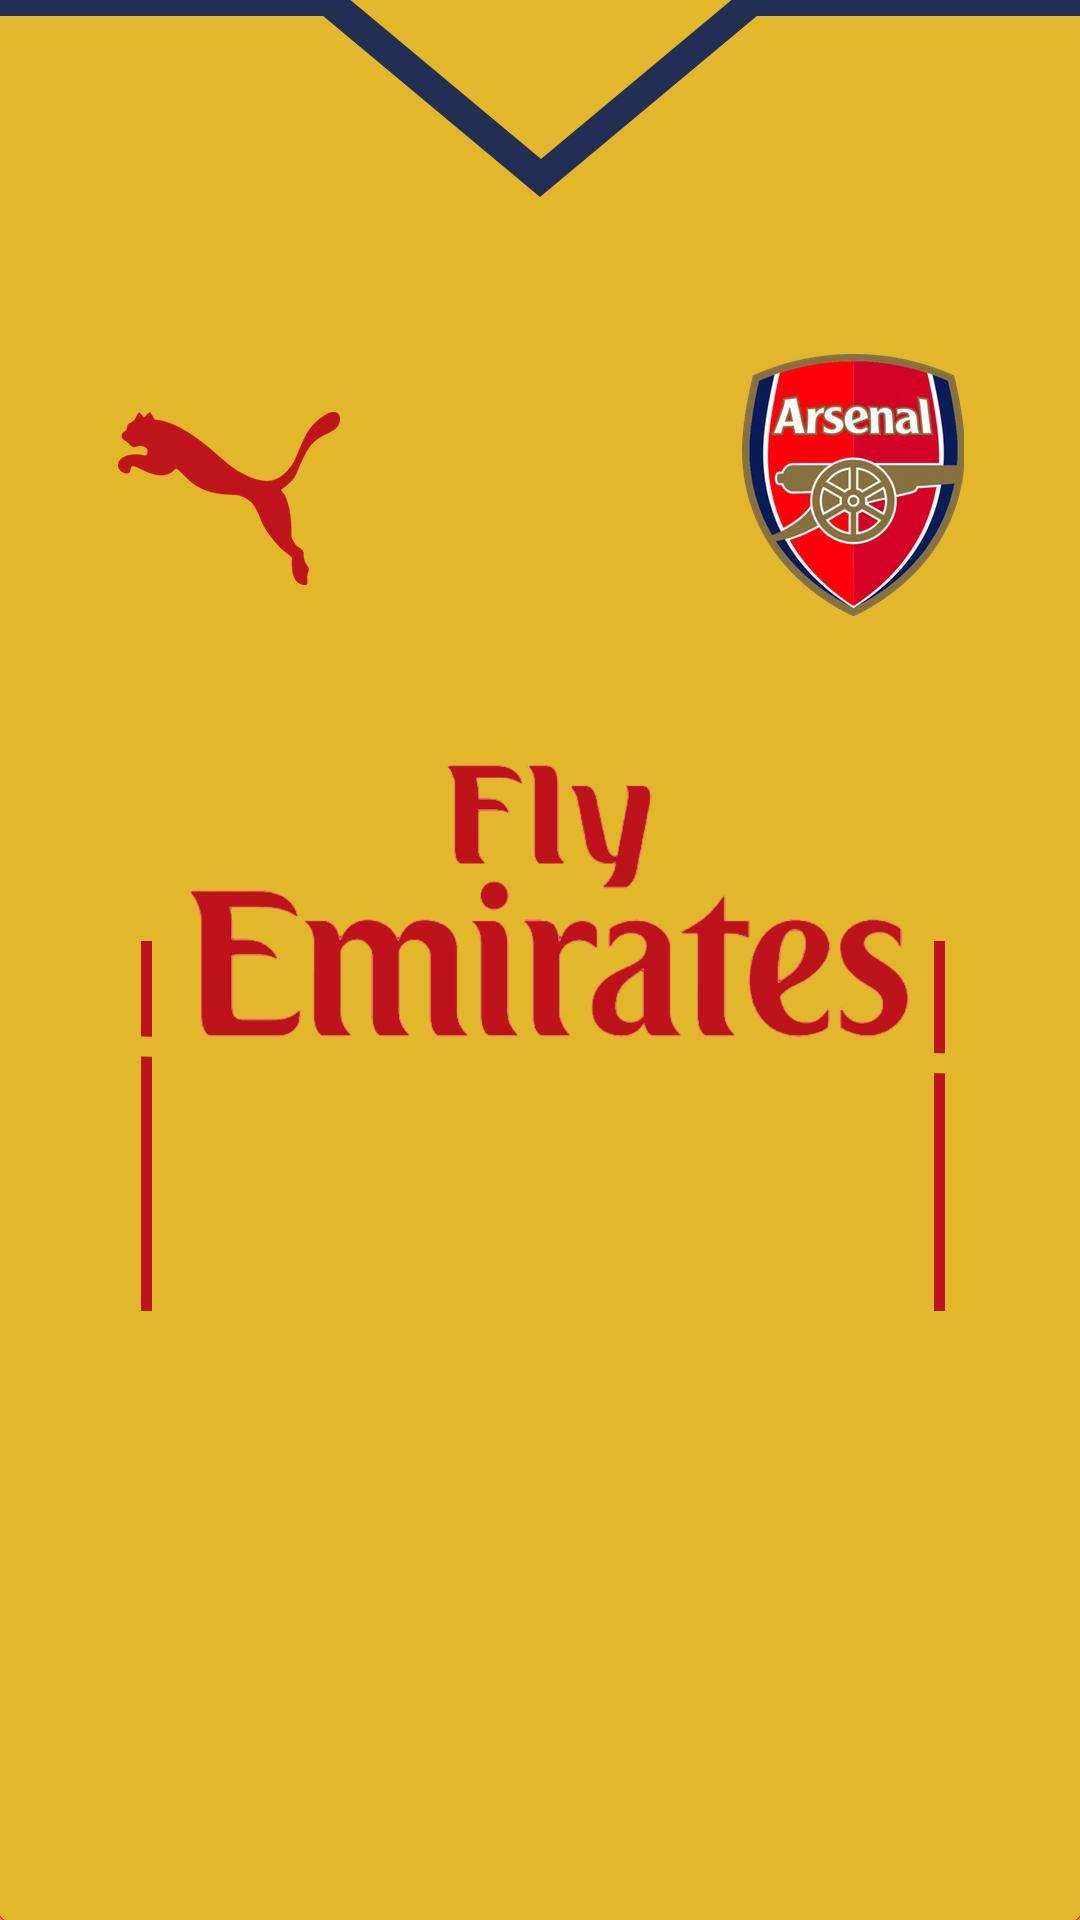 Anthony Woodman IOS Android, Arsenal Season